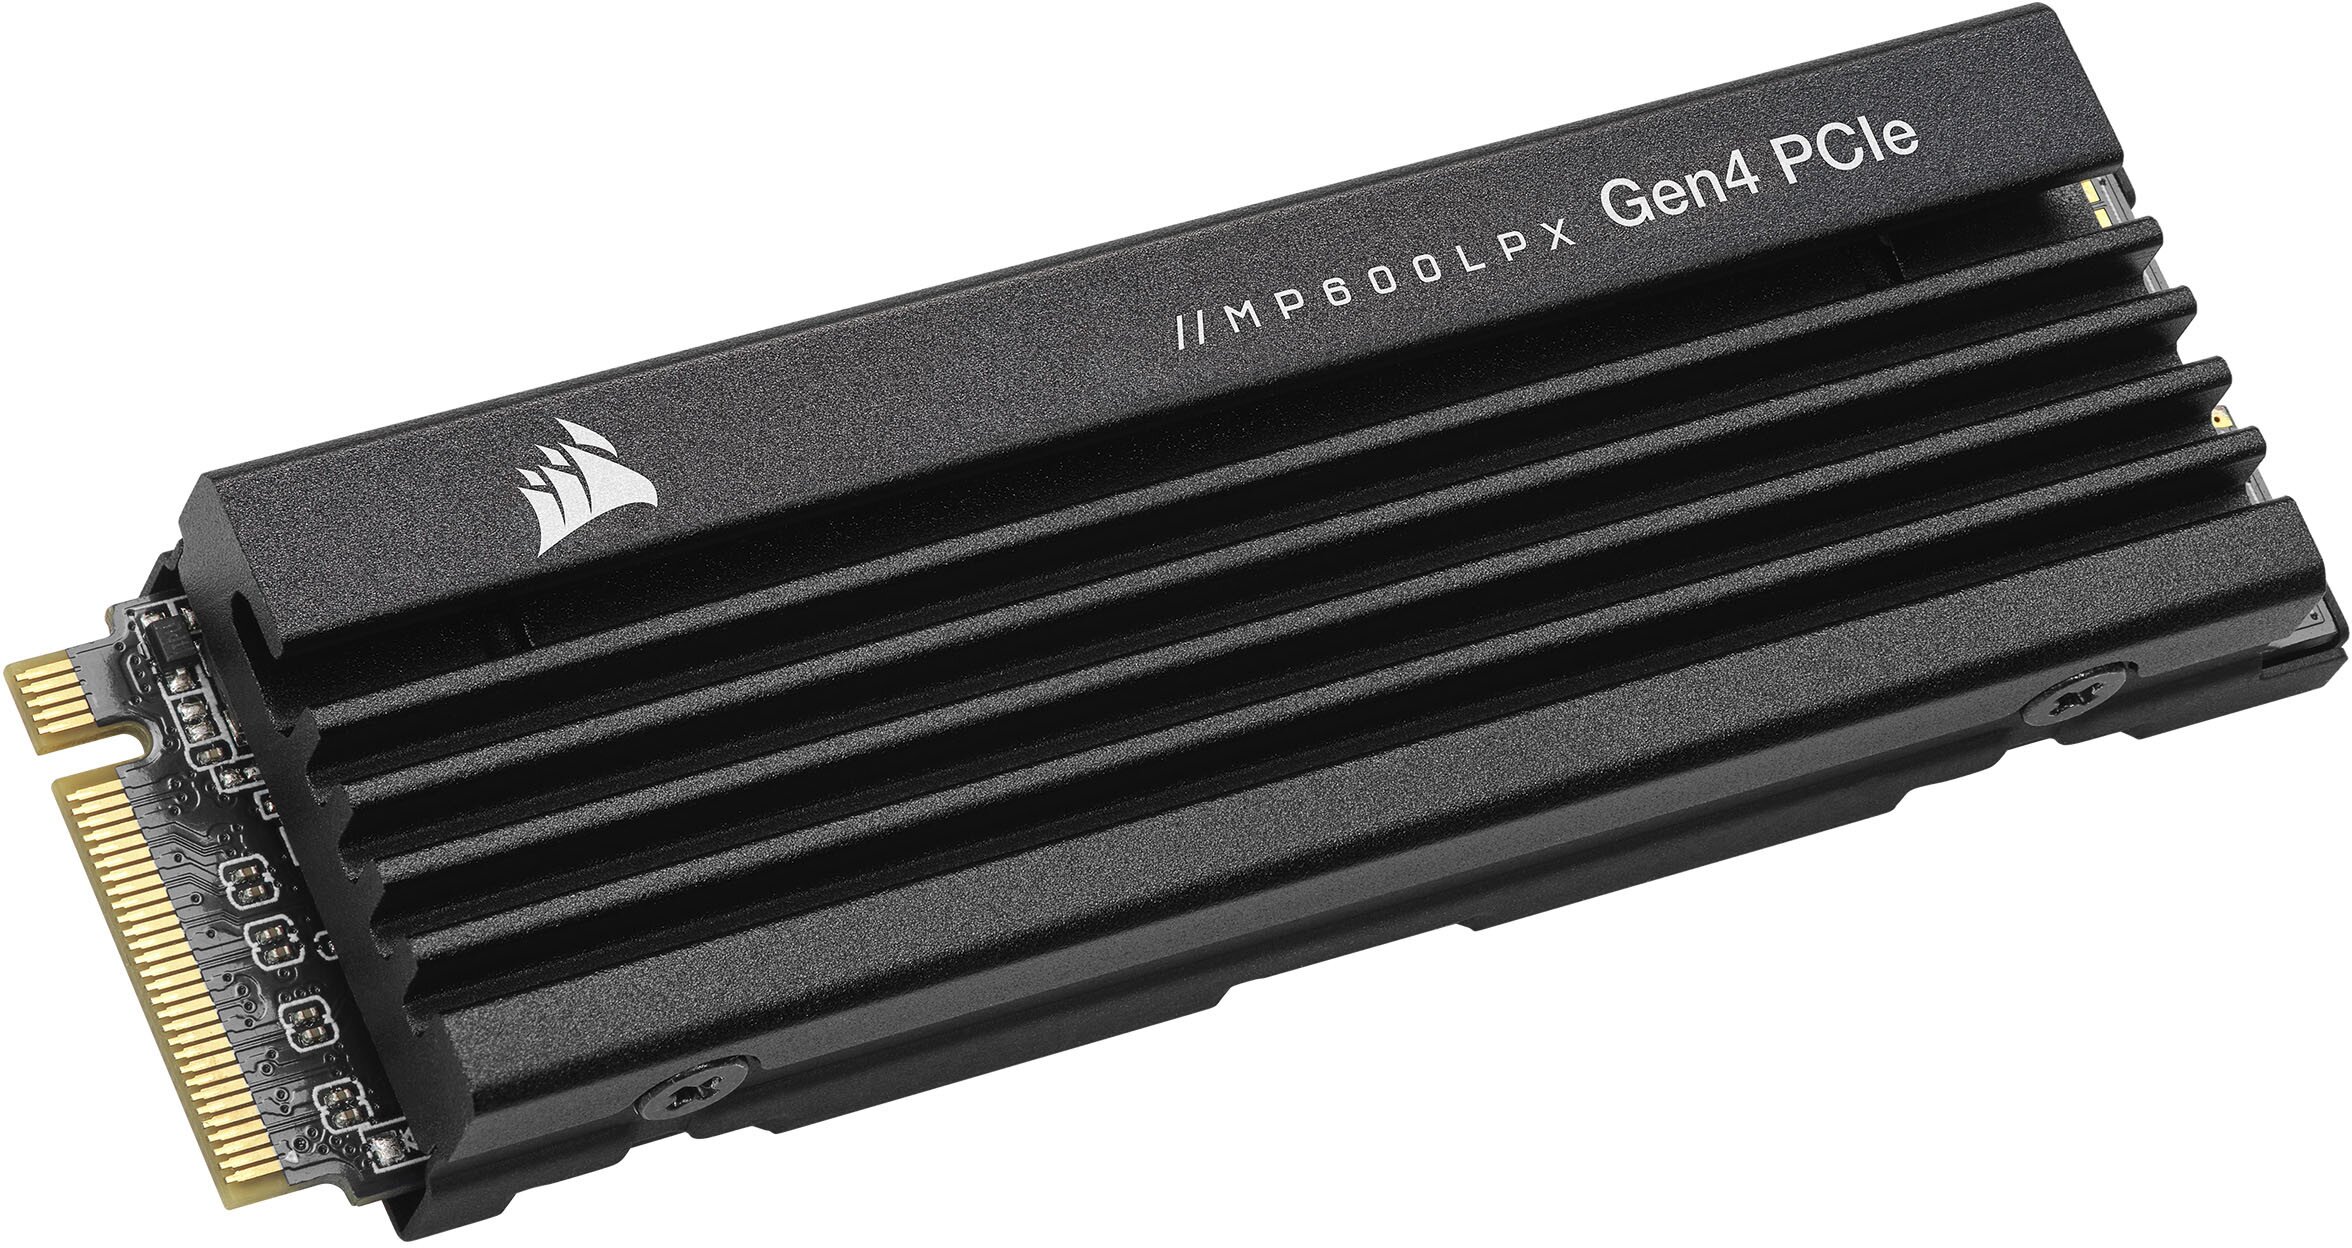 CORSAIR MP600 PRO Gen4 PCIe x4 NVMe M.2 SSD – High-Density TLC NAND –  Aluminum Heatspreader – M.2 2280 Form-Factor